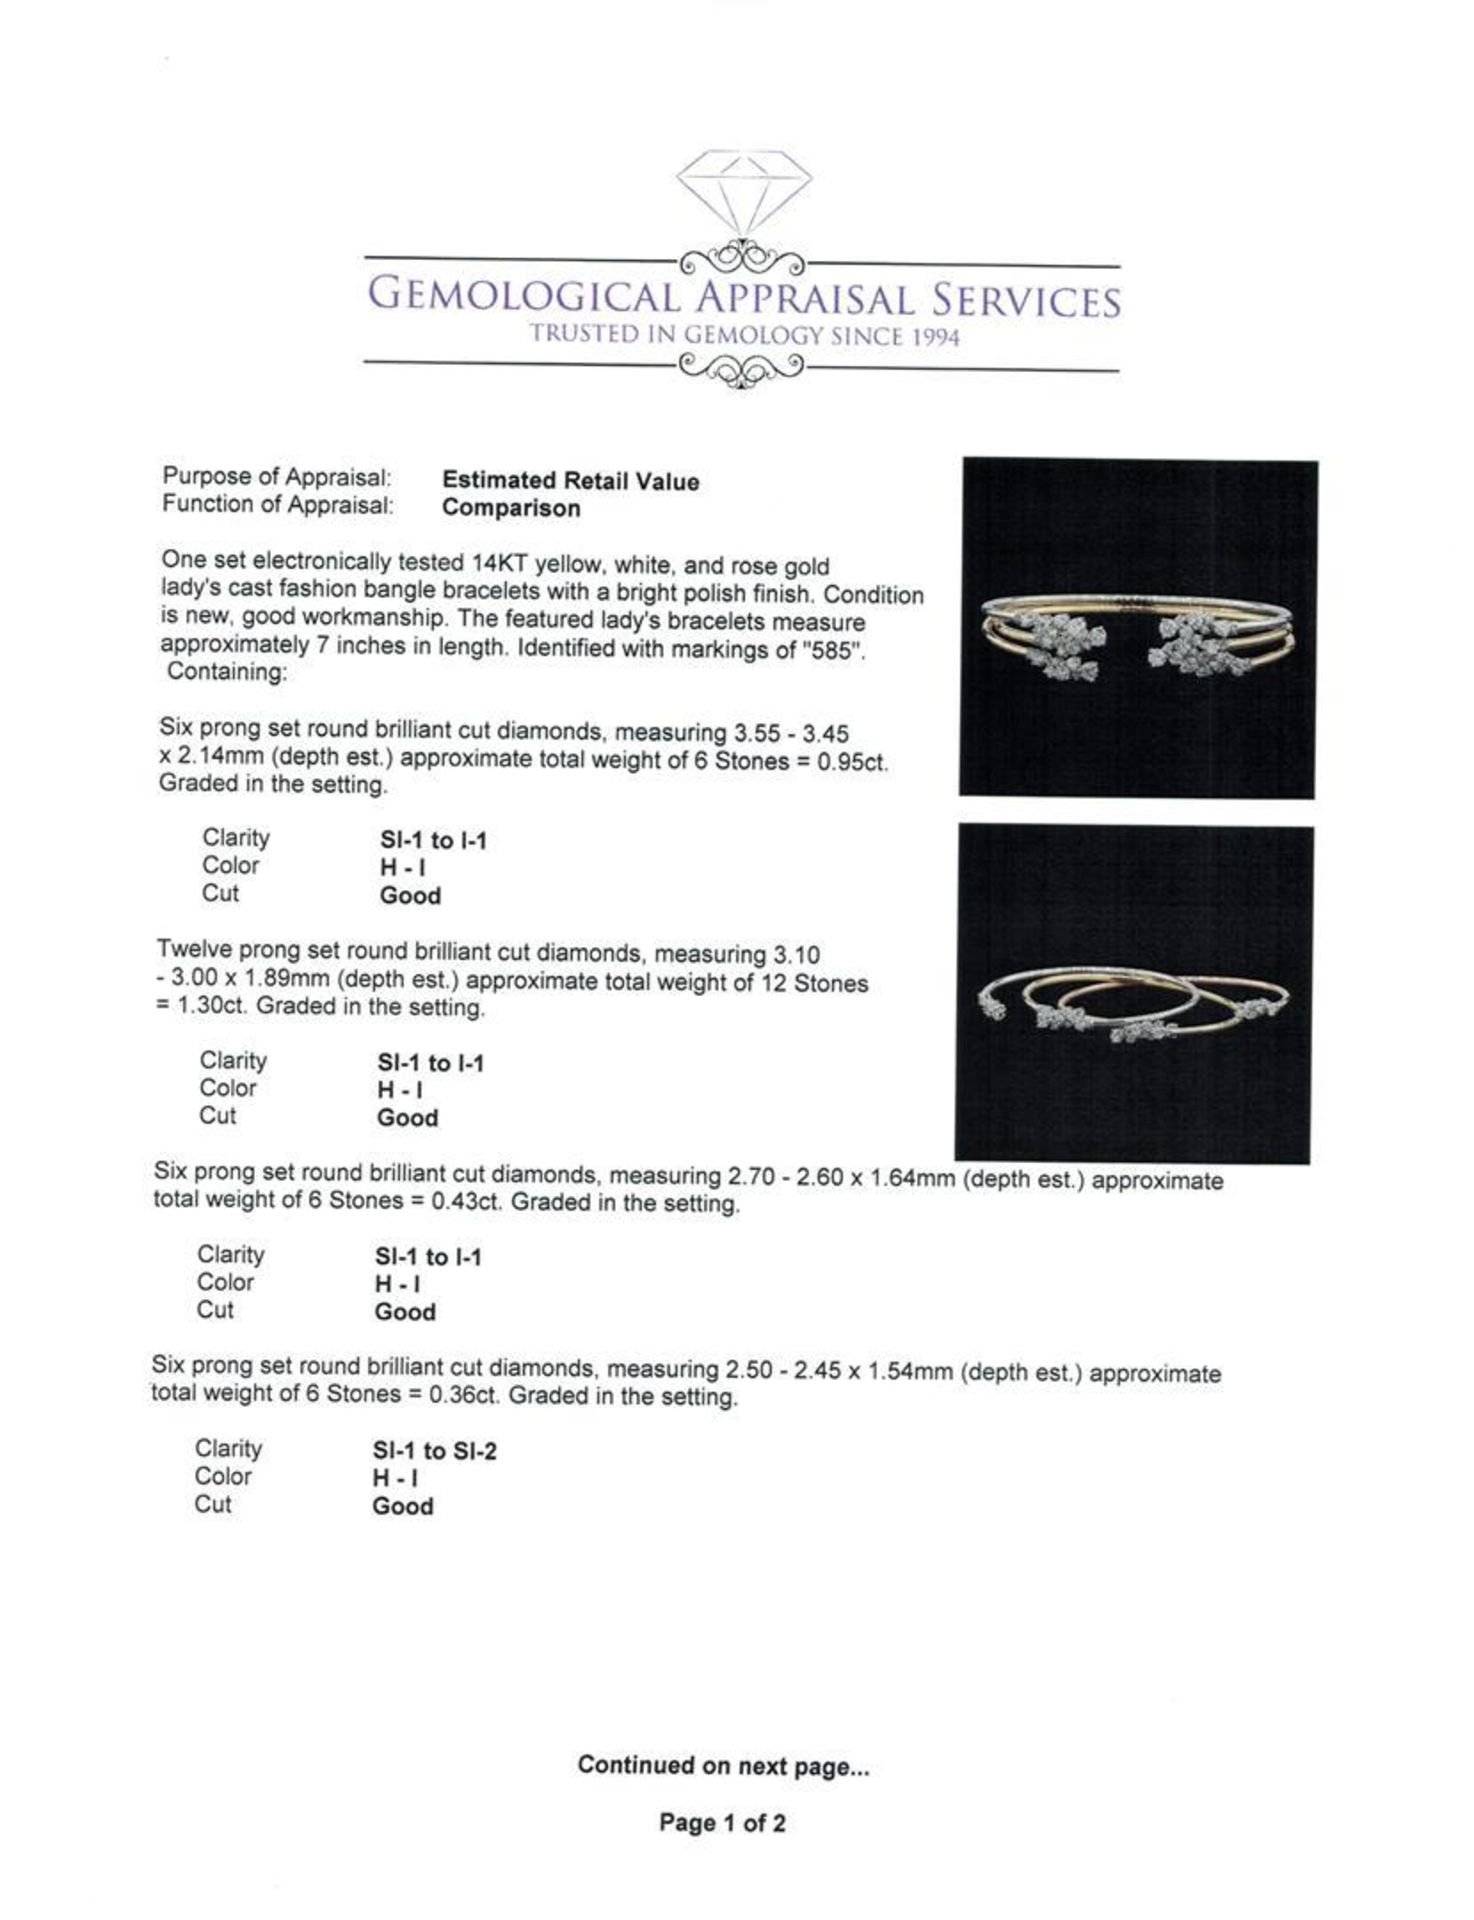 3.34 ctw Diamond Bangle Bracelets - 14KT Yellow, White, and Rose Gold - Image 4 of 5